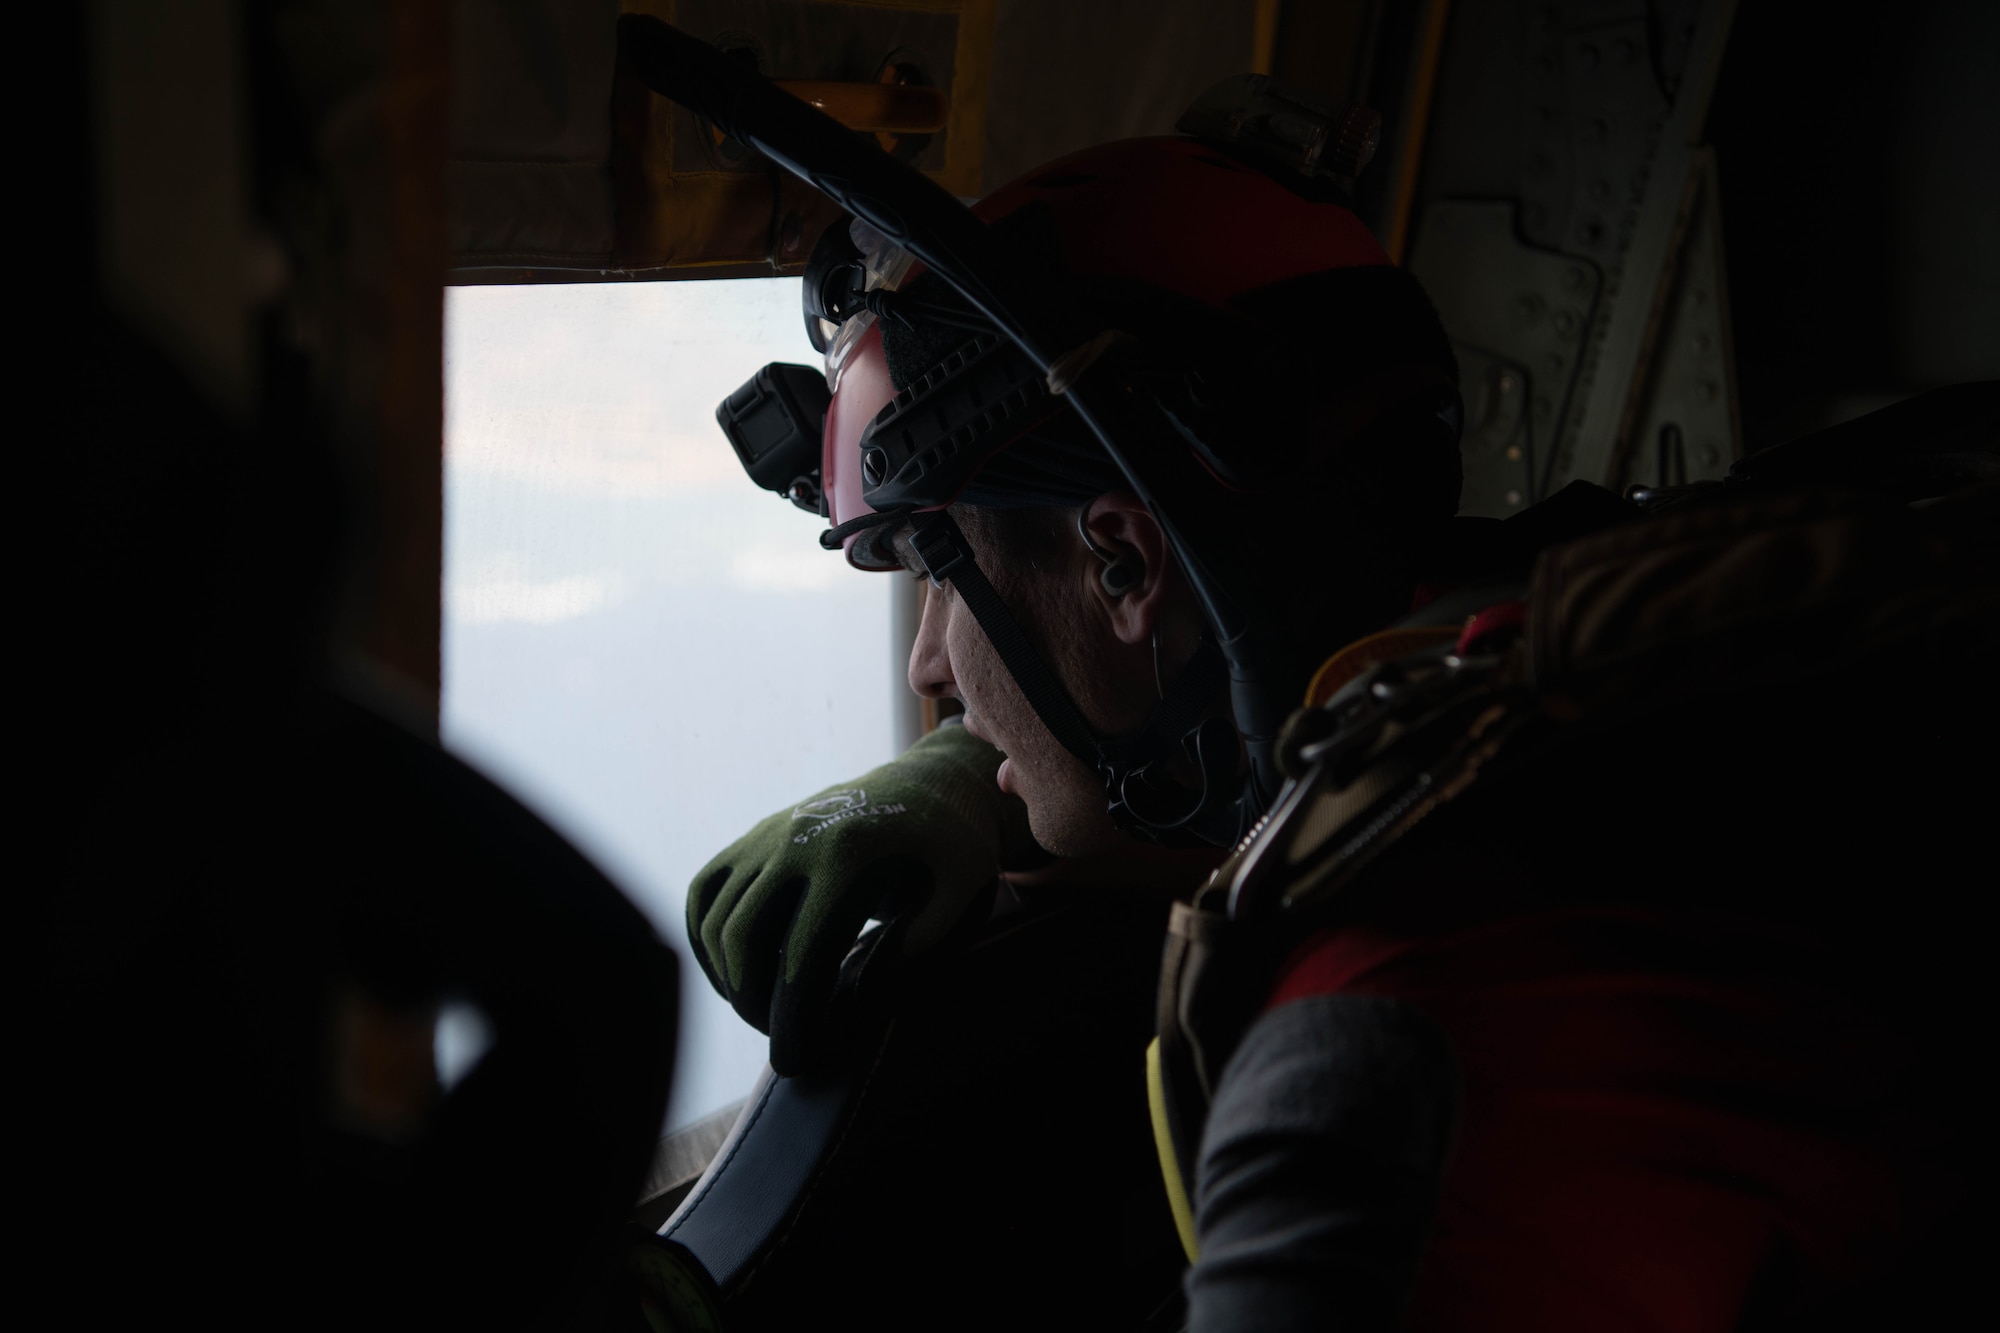 An Airman looks out a window on an aircraft.